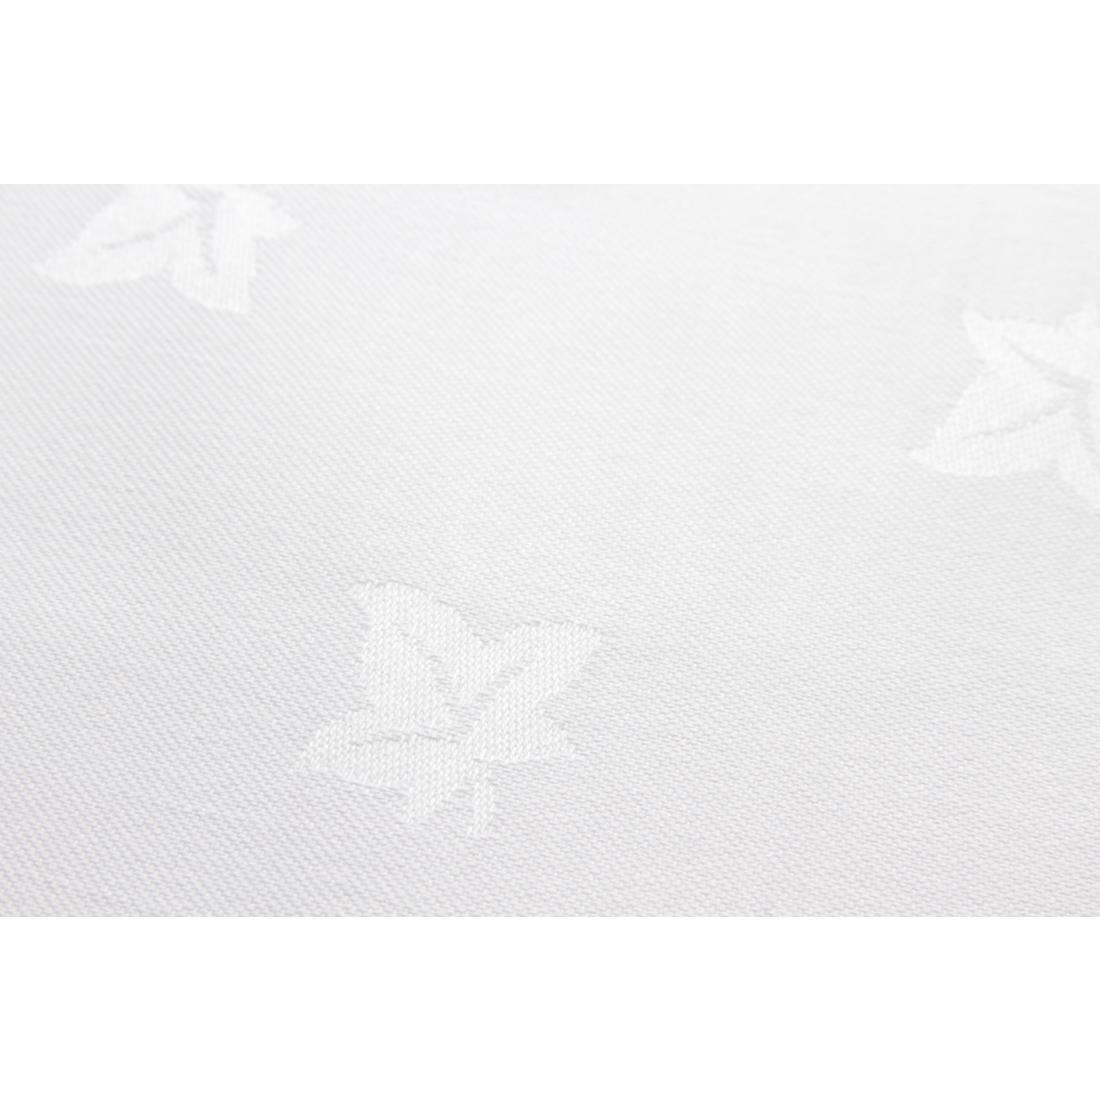 Mitre Luxury Luxor Cotton Napkins Ivy Leaf White 450 x 450mm (Pack of 10) - HB556  - 3